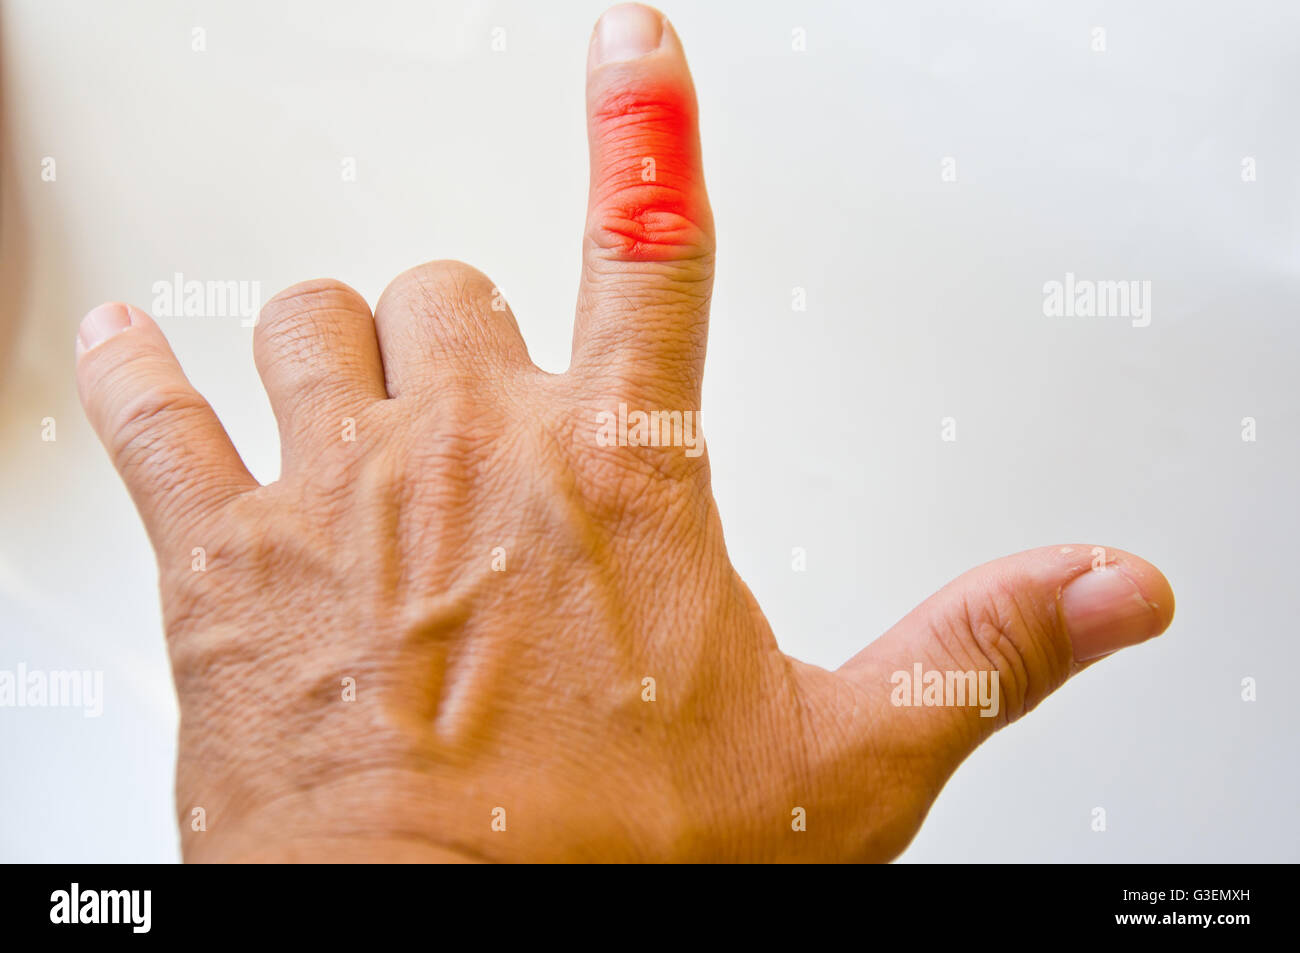 Сильно болят пальцы рук что делать. Болит указательный палец. Болят пальцы на левой руке. Указательный палец левой руки. Болит сустав большого пальца на руке.